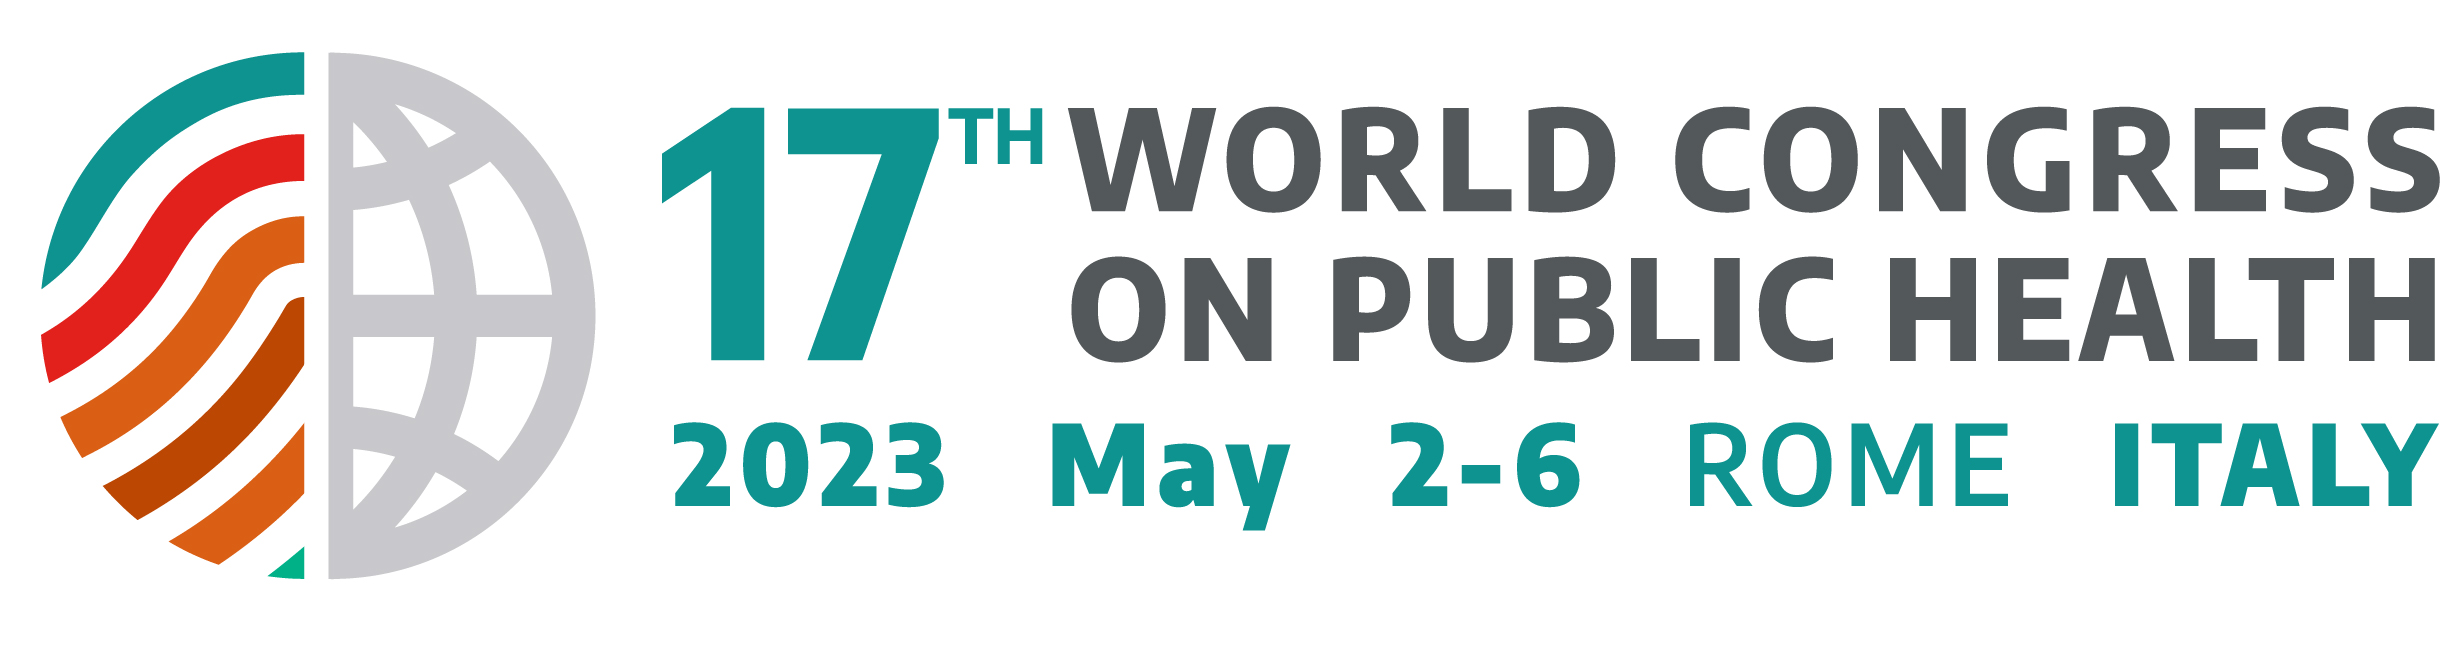 17th World Congress on Public Health - Rome 2023